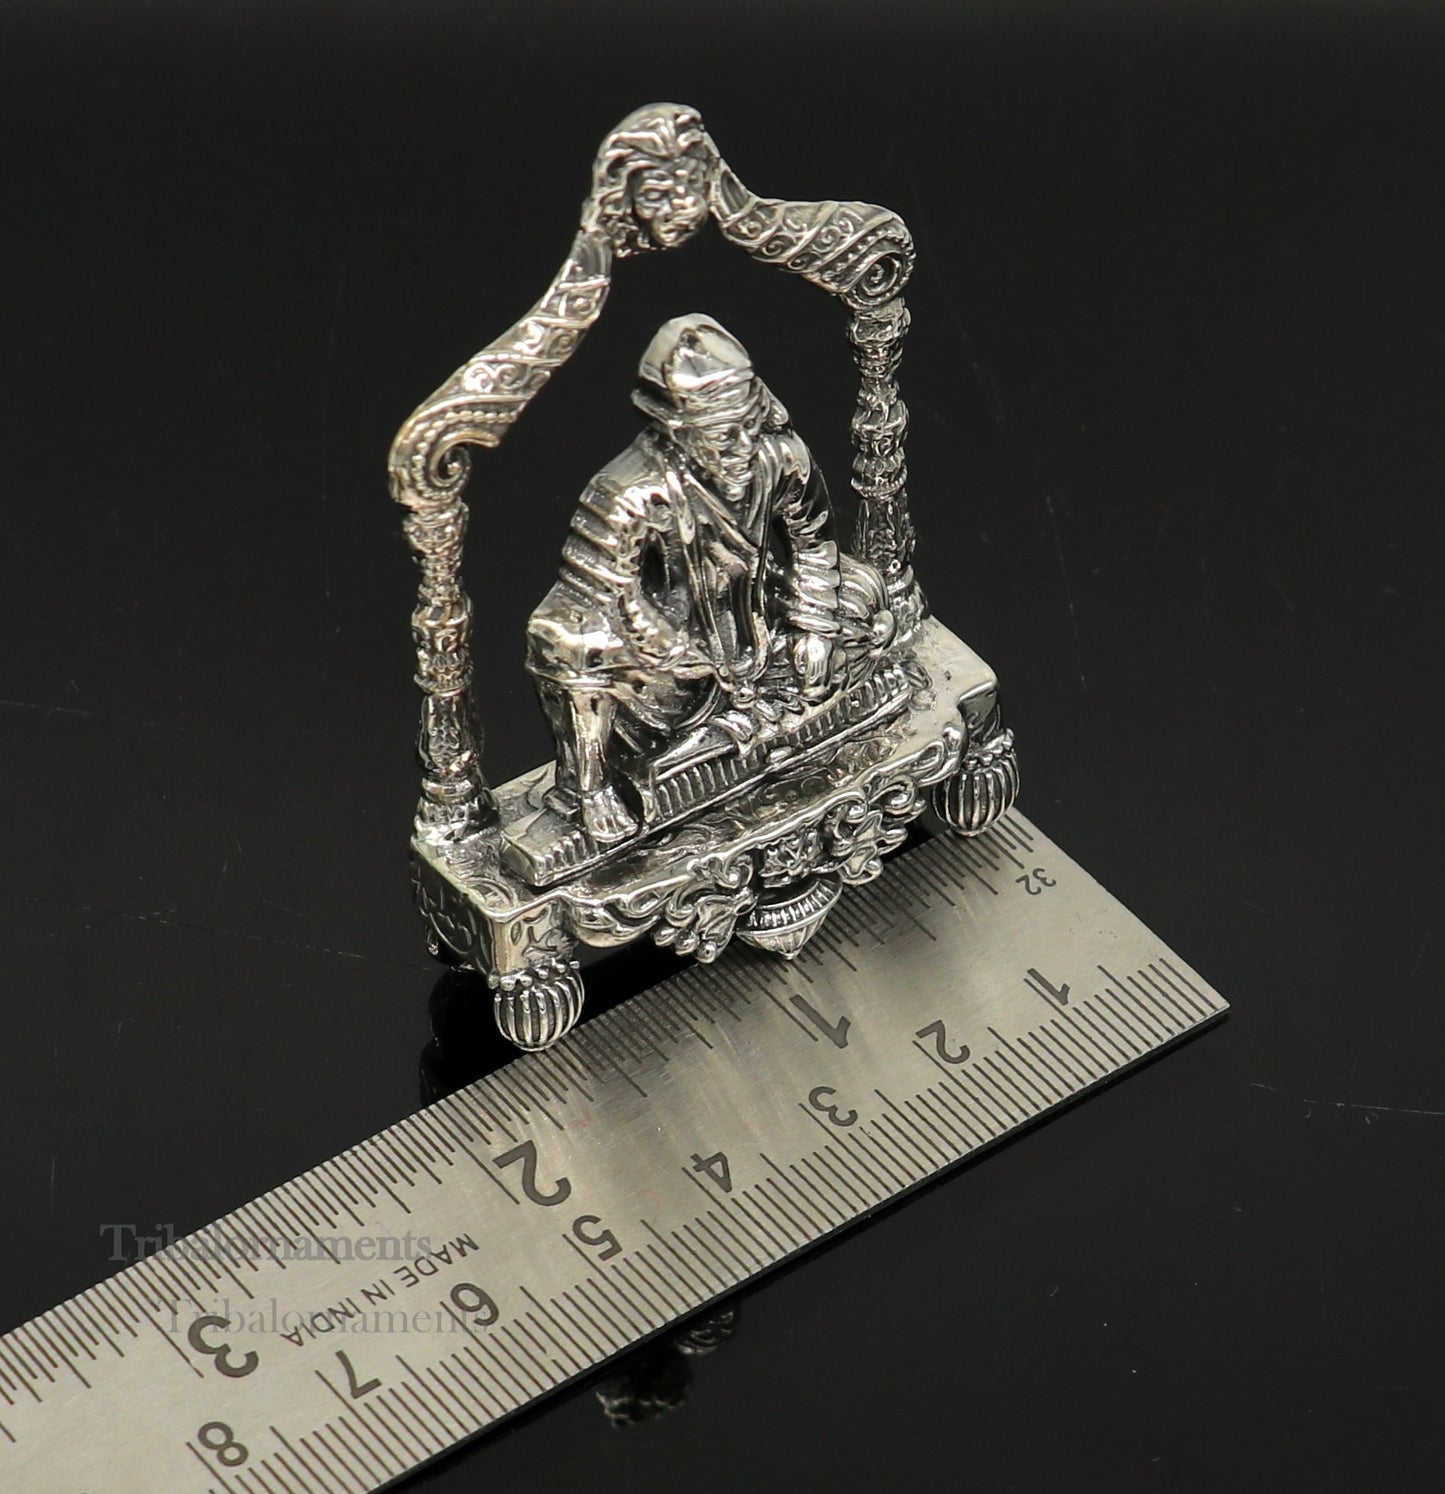 925 sterling silver handmade Divine Hindu idol deity Sai Baba statue murti divine Statue Sculpture figurine puja article gifting art173 - TRIBAL ORNAMENTS